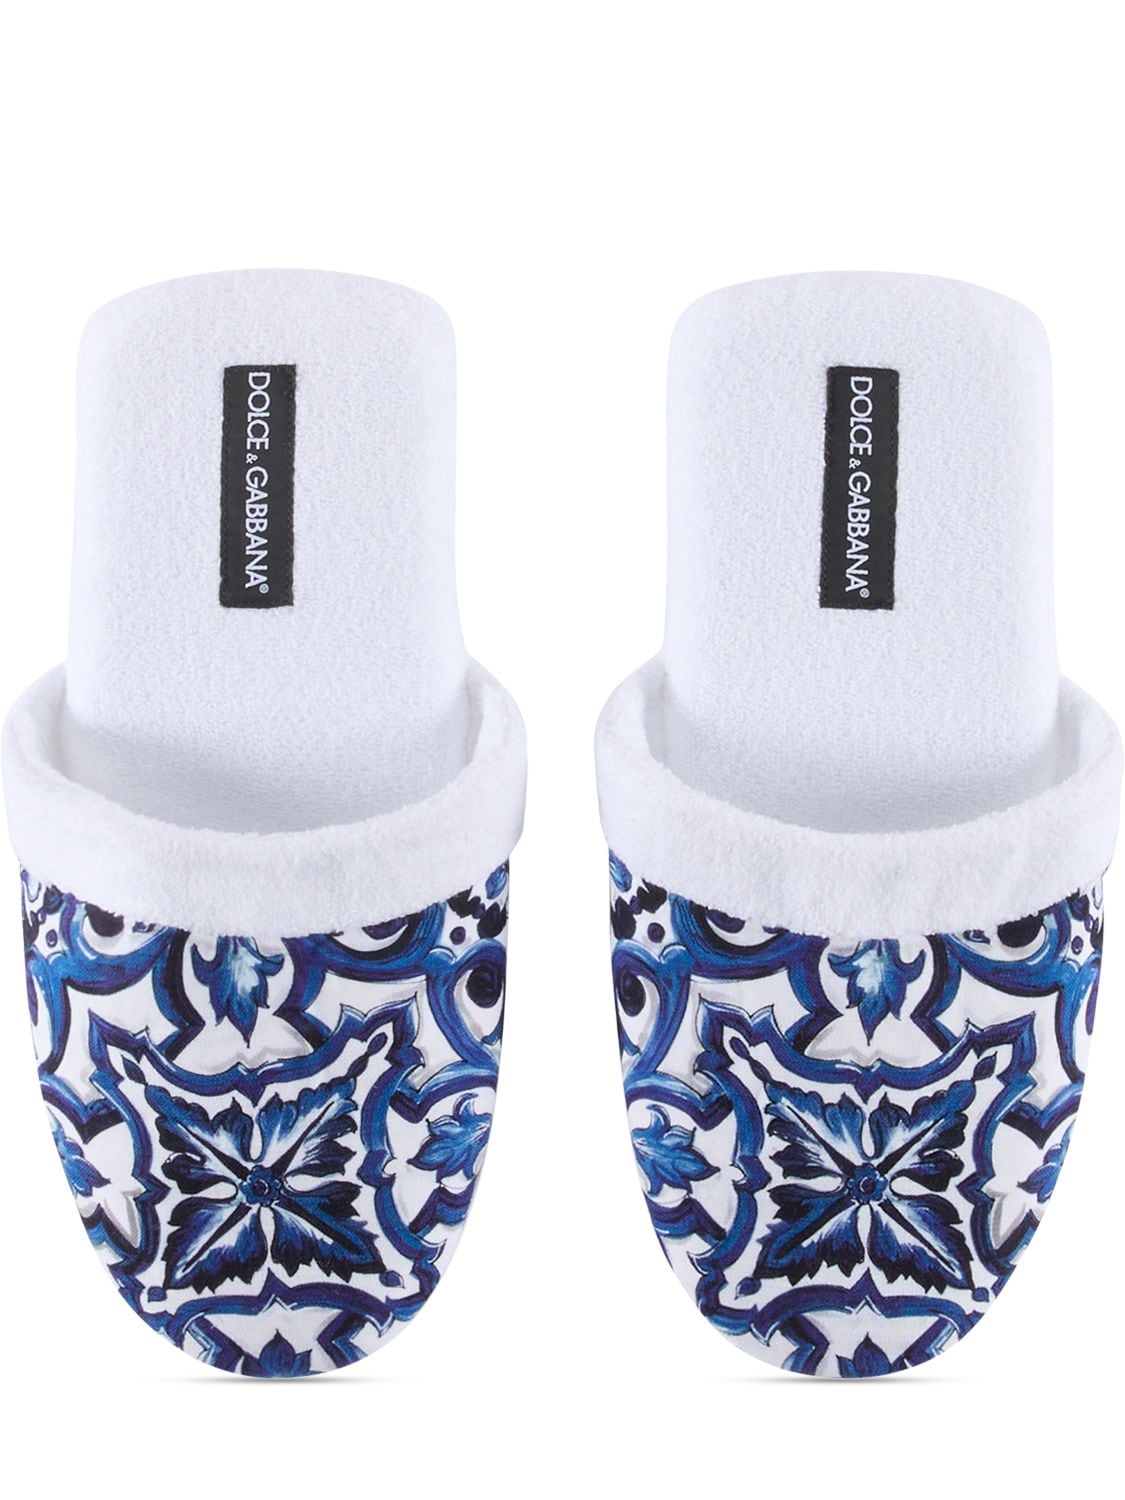 Shop Dolce & Gabbana Blu Mediterraneo Slippers